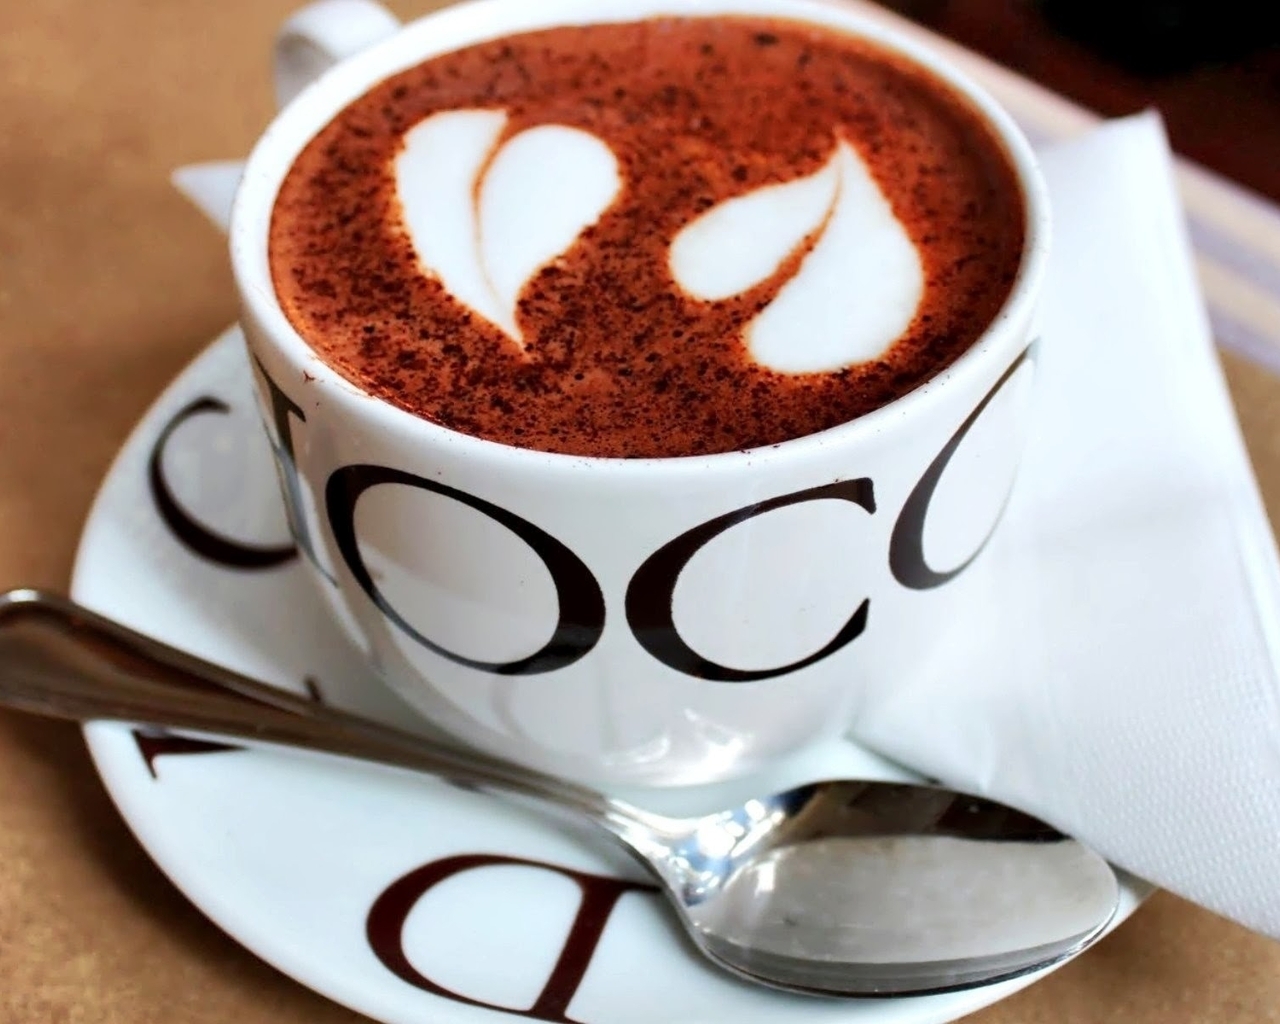 Картинка: Капучино, cappuccino, кофе, пенка, сердечки, рисунок, кружка, блюдце, ложечка